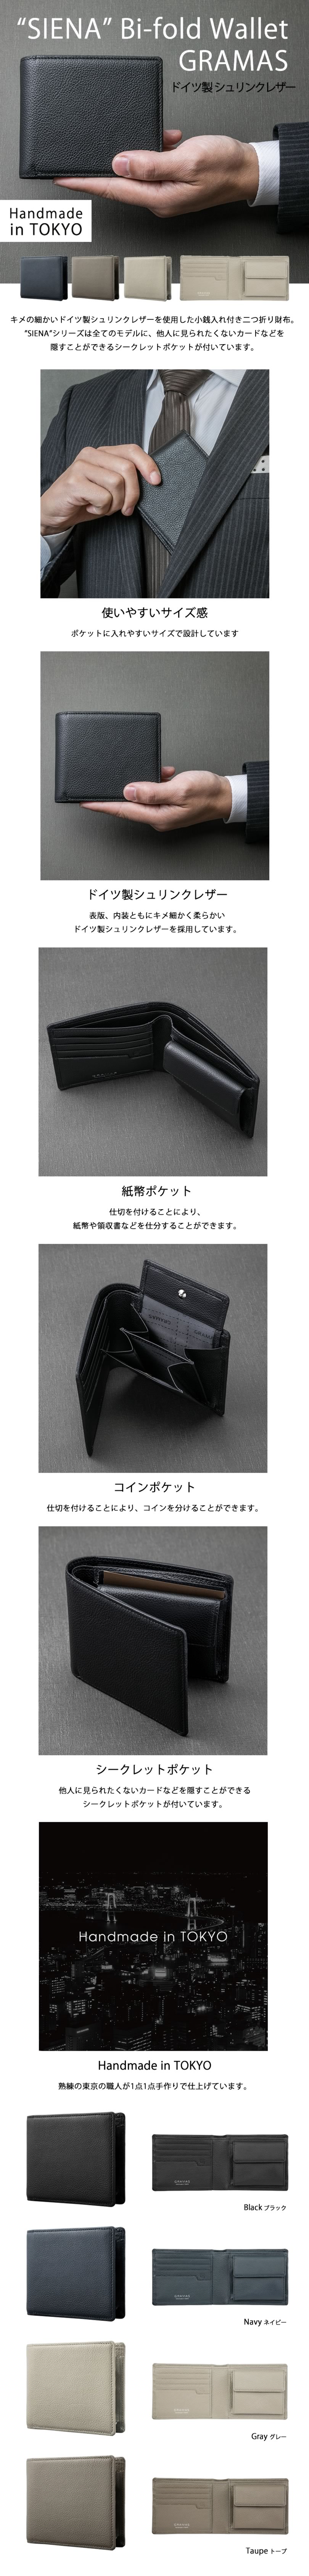 Gramas Siena Bi Fold Wallet 財布 二つ折り メンズ おすすめ 本革 二つ折り財布